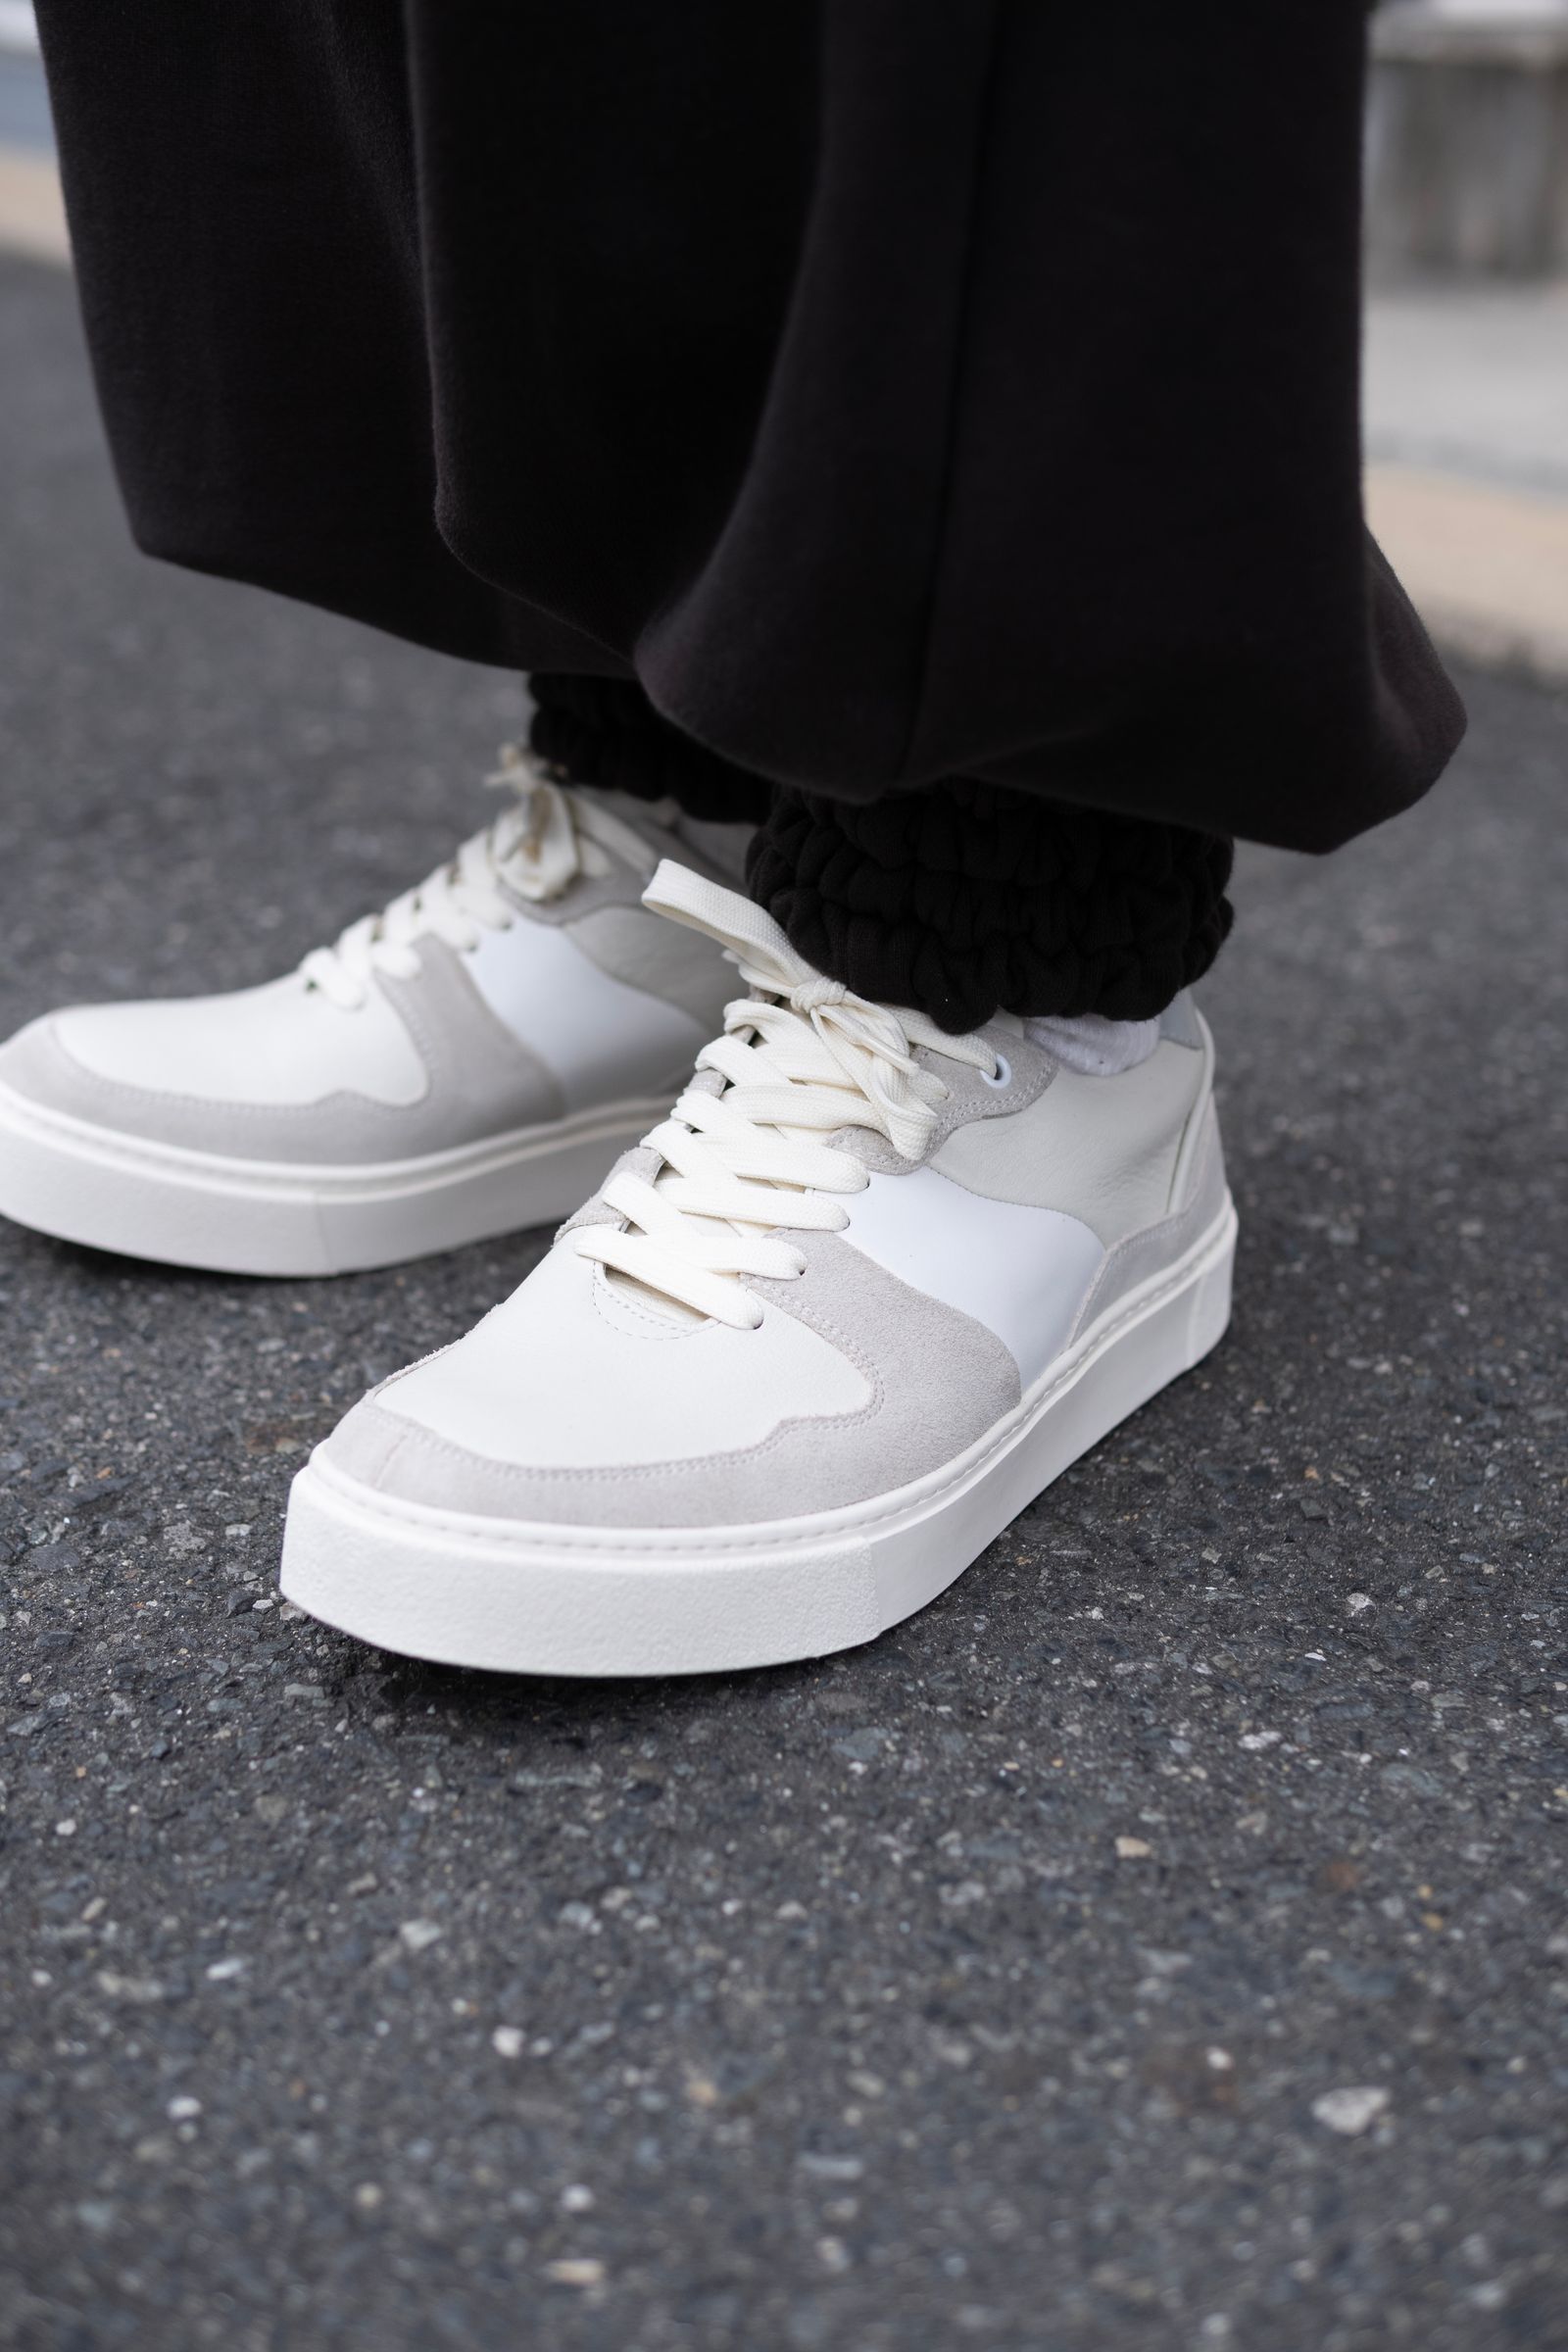 EARLE - Basskate Sneakers / White | Retikle Online Store